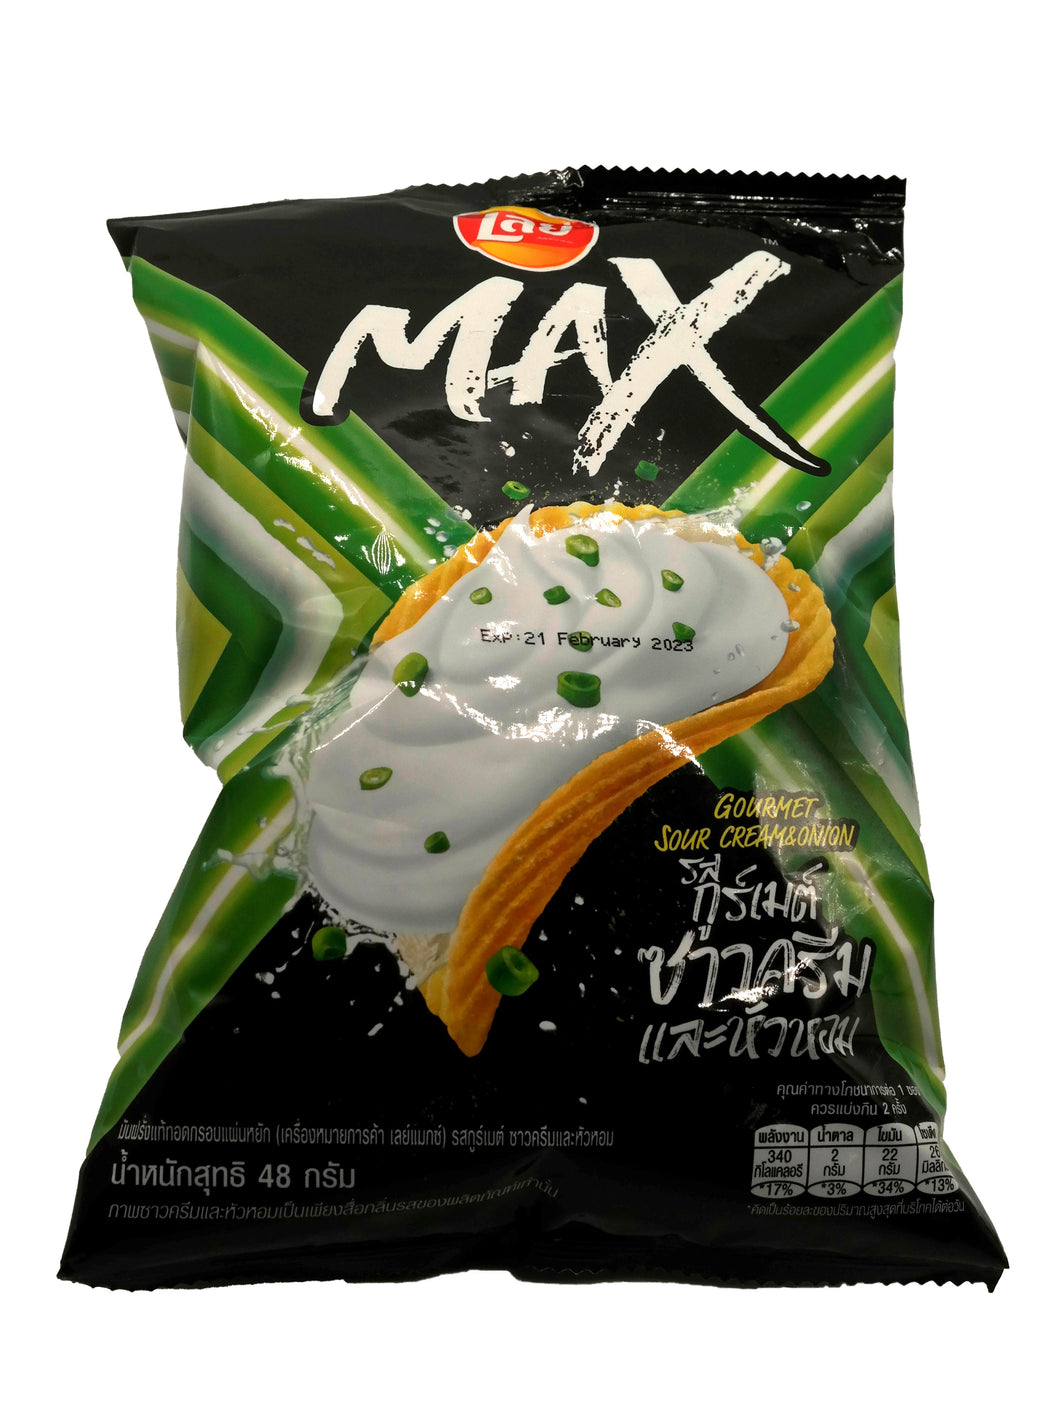 Lay's Max Ridged Potato Chips- Gourmet Sour Cream & Onion Flavor